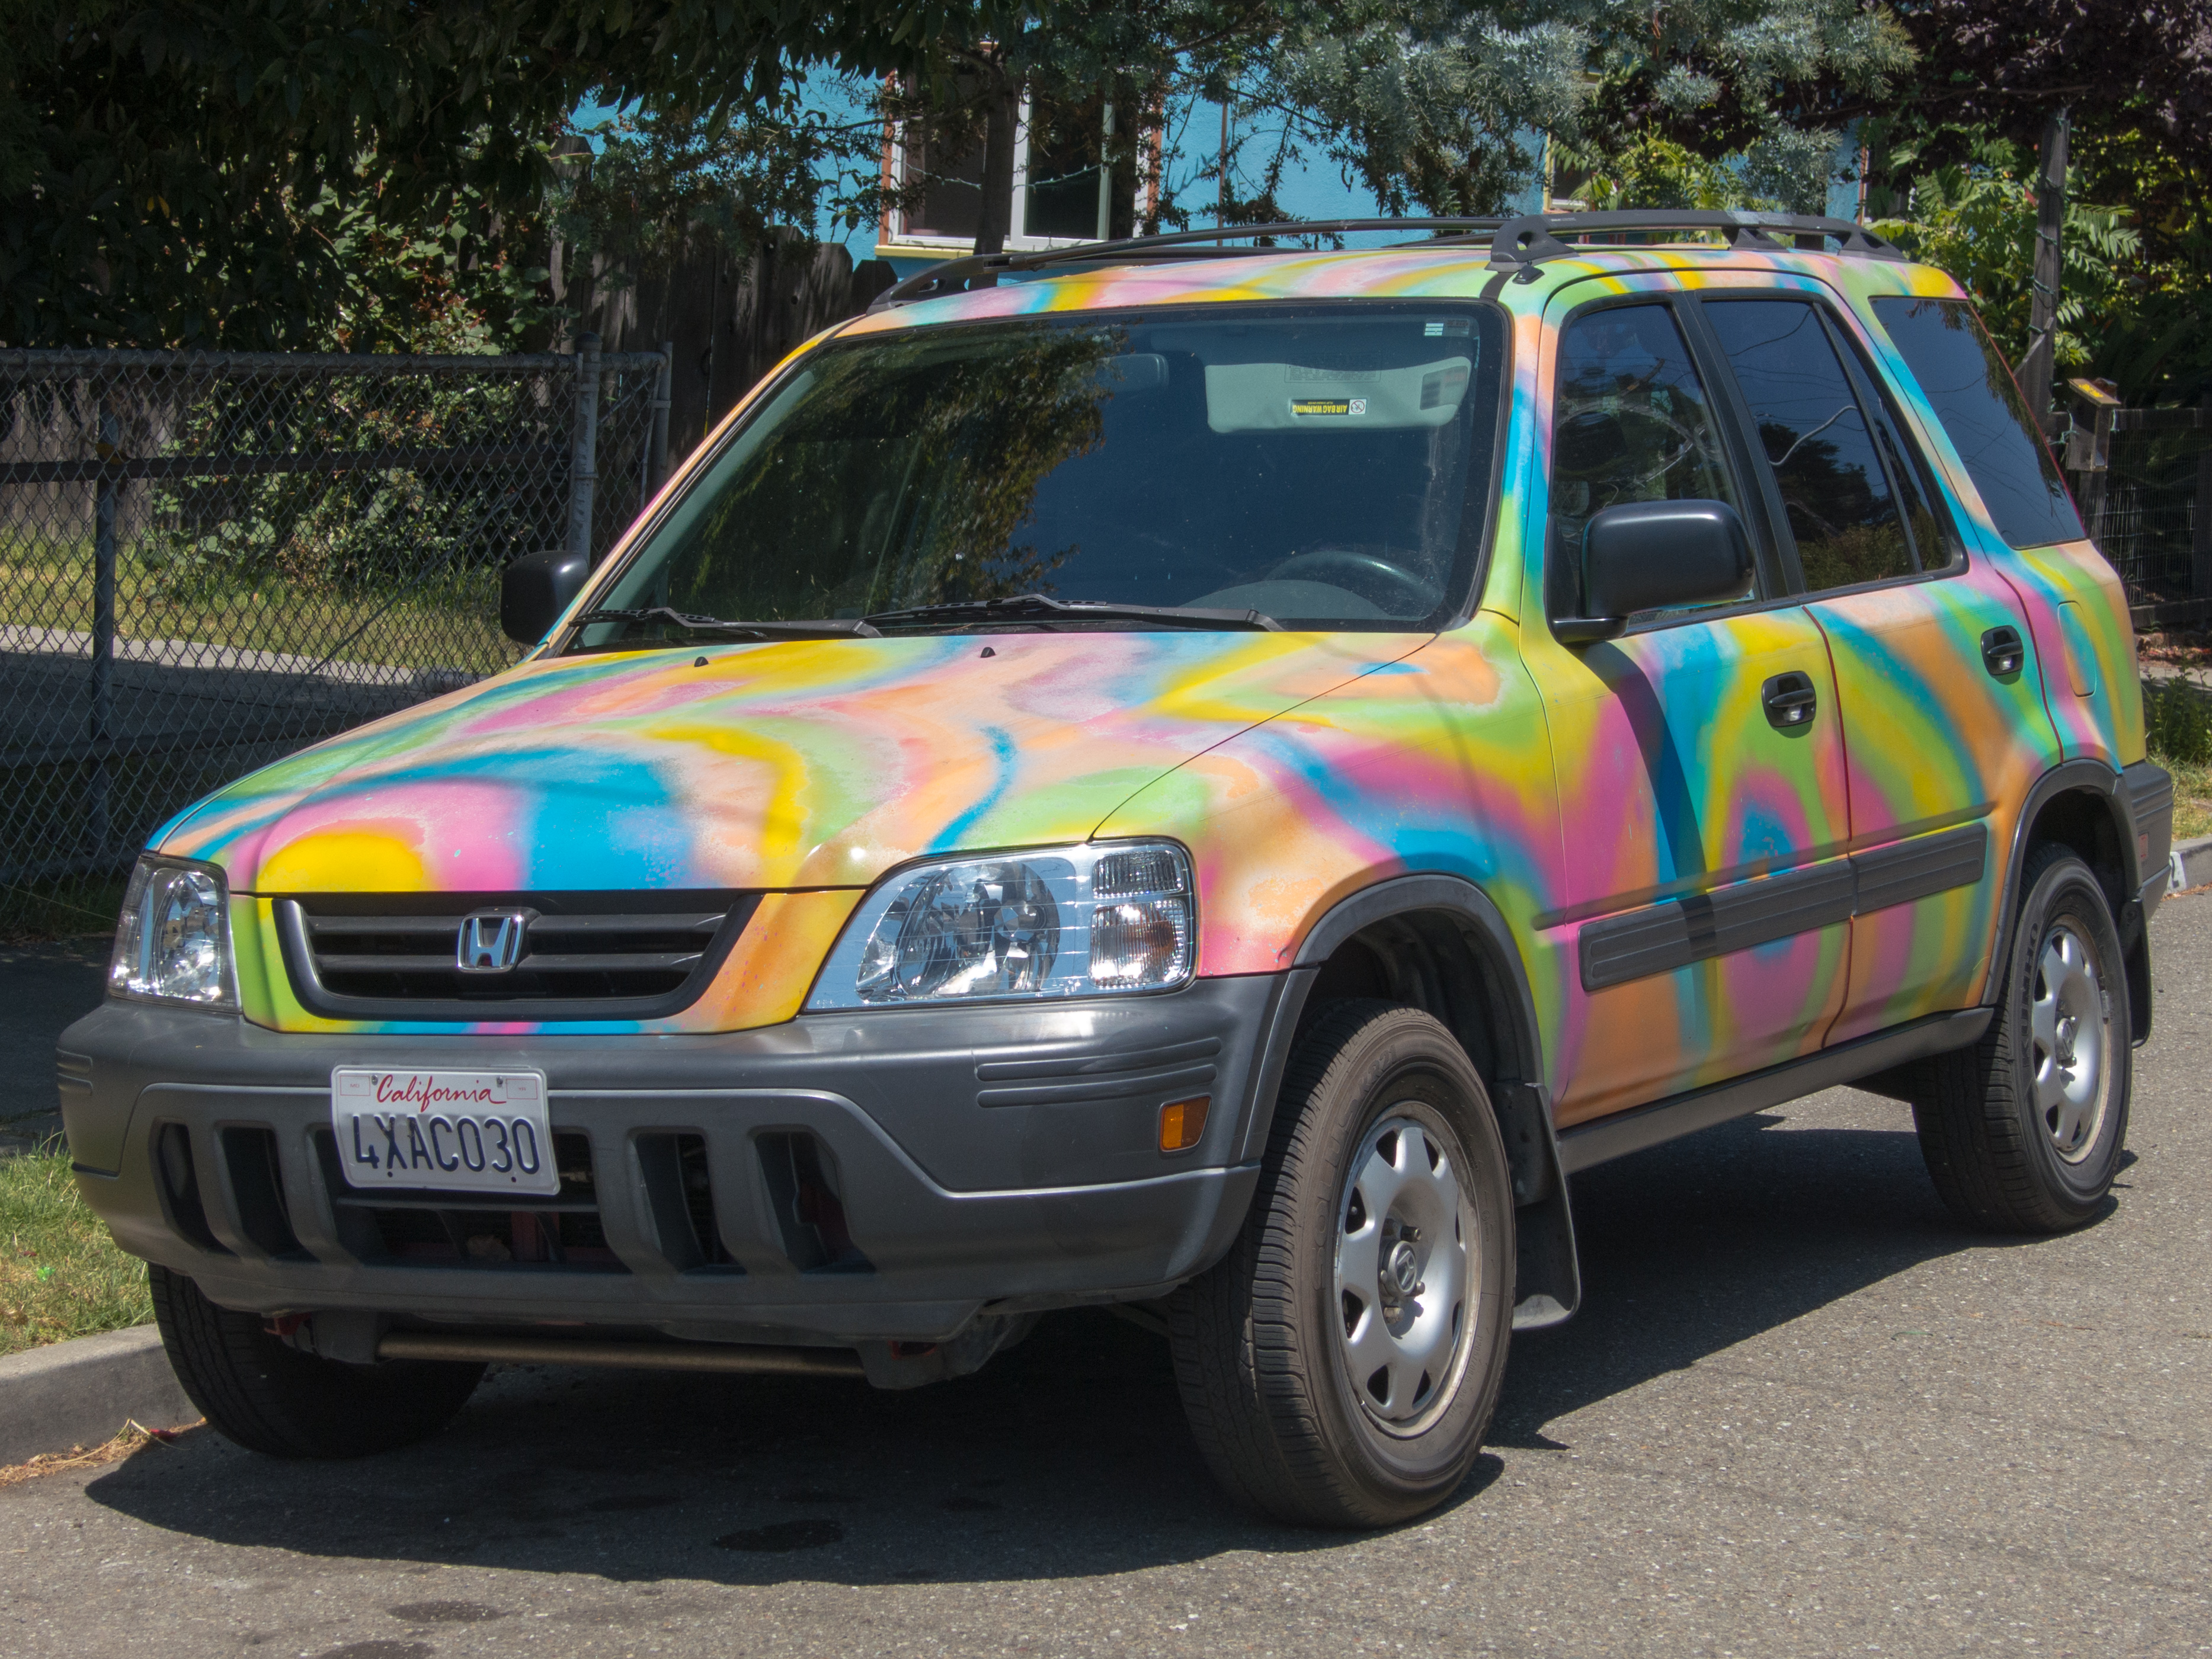 Car with colorful tye-dye paint job photo